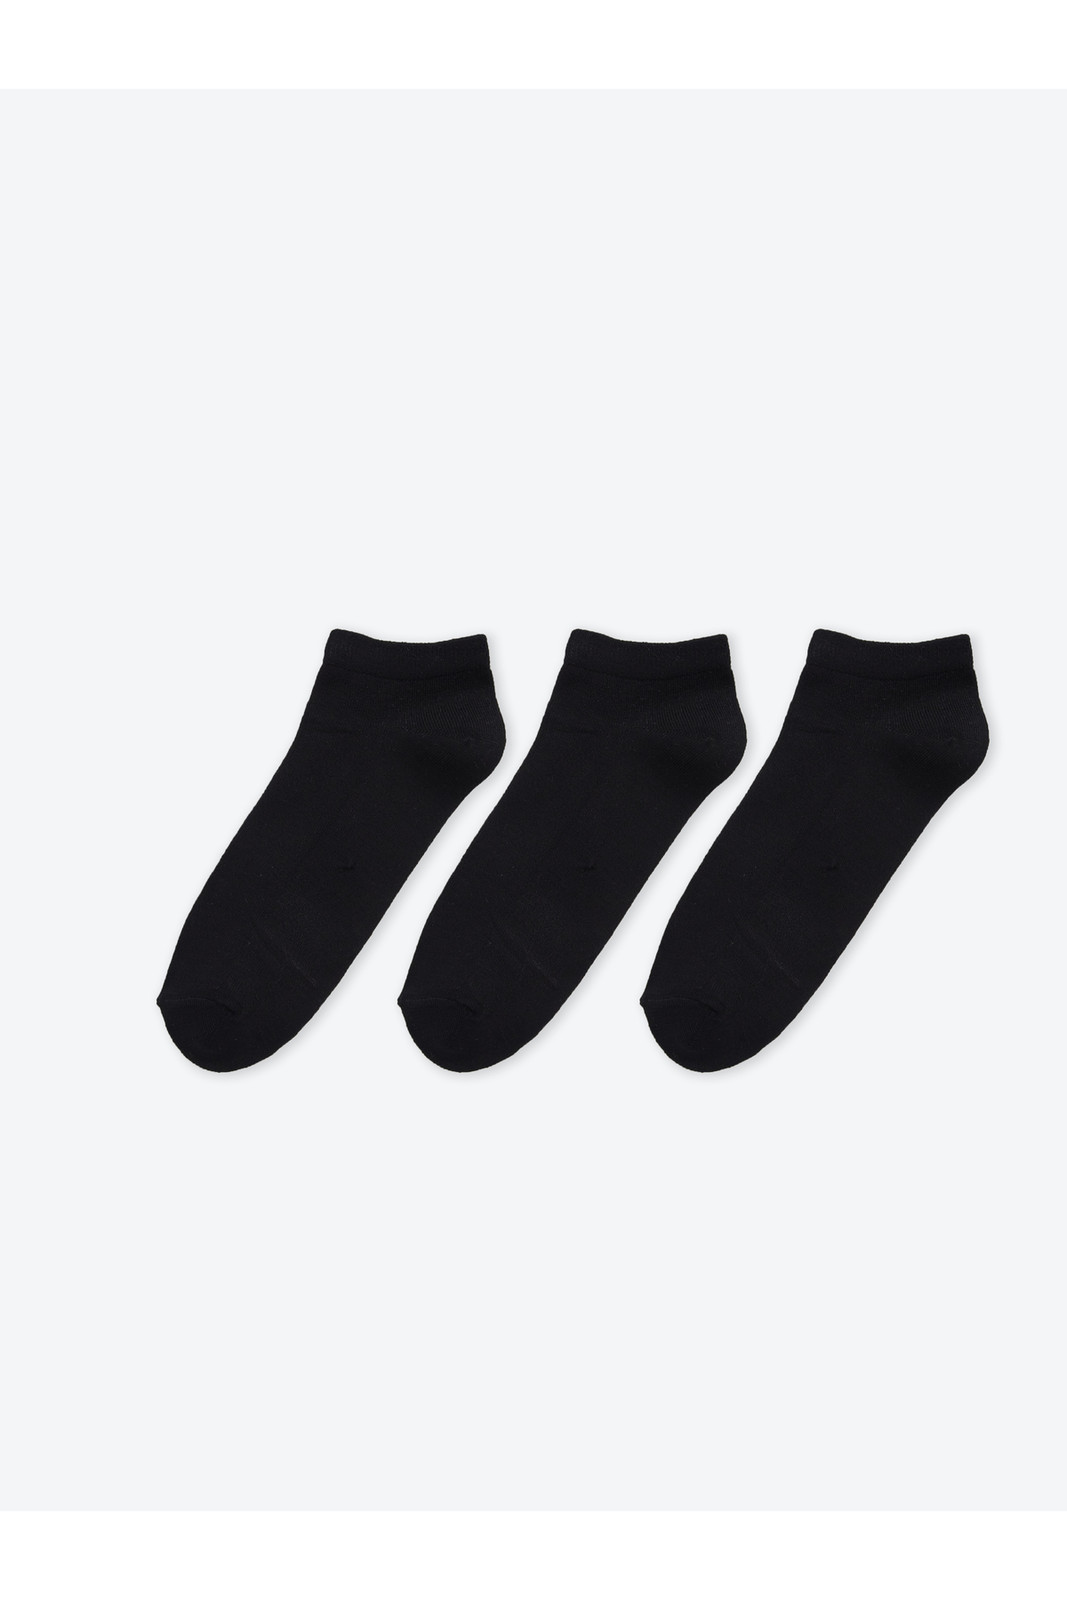 LC Waikiki 3-Pack Women's Plain Booties Socks